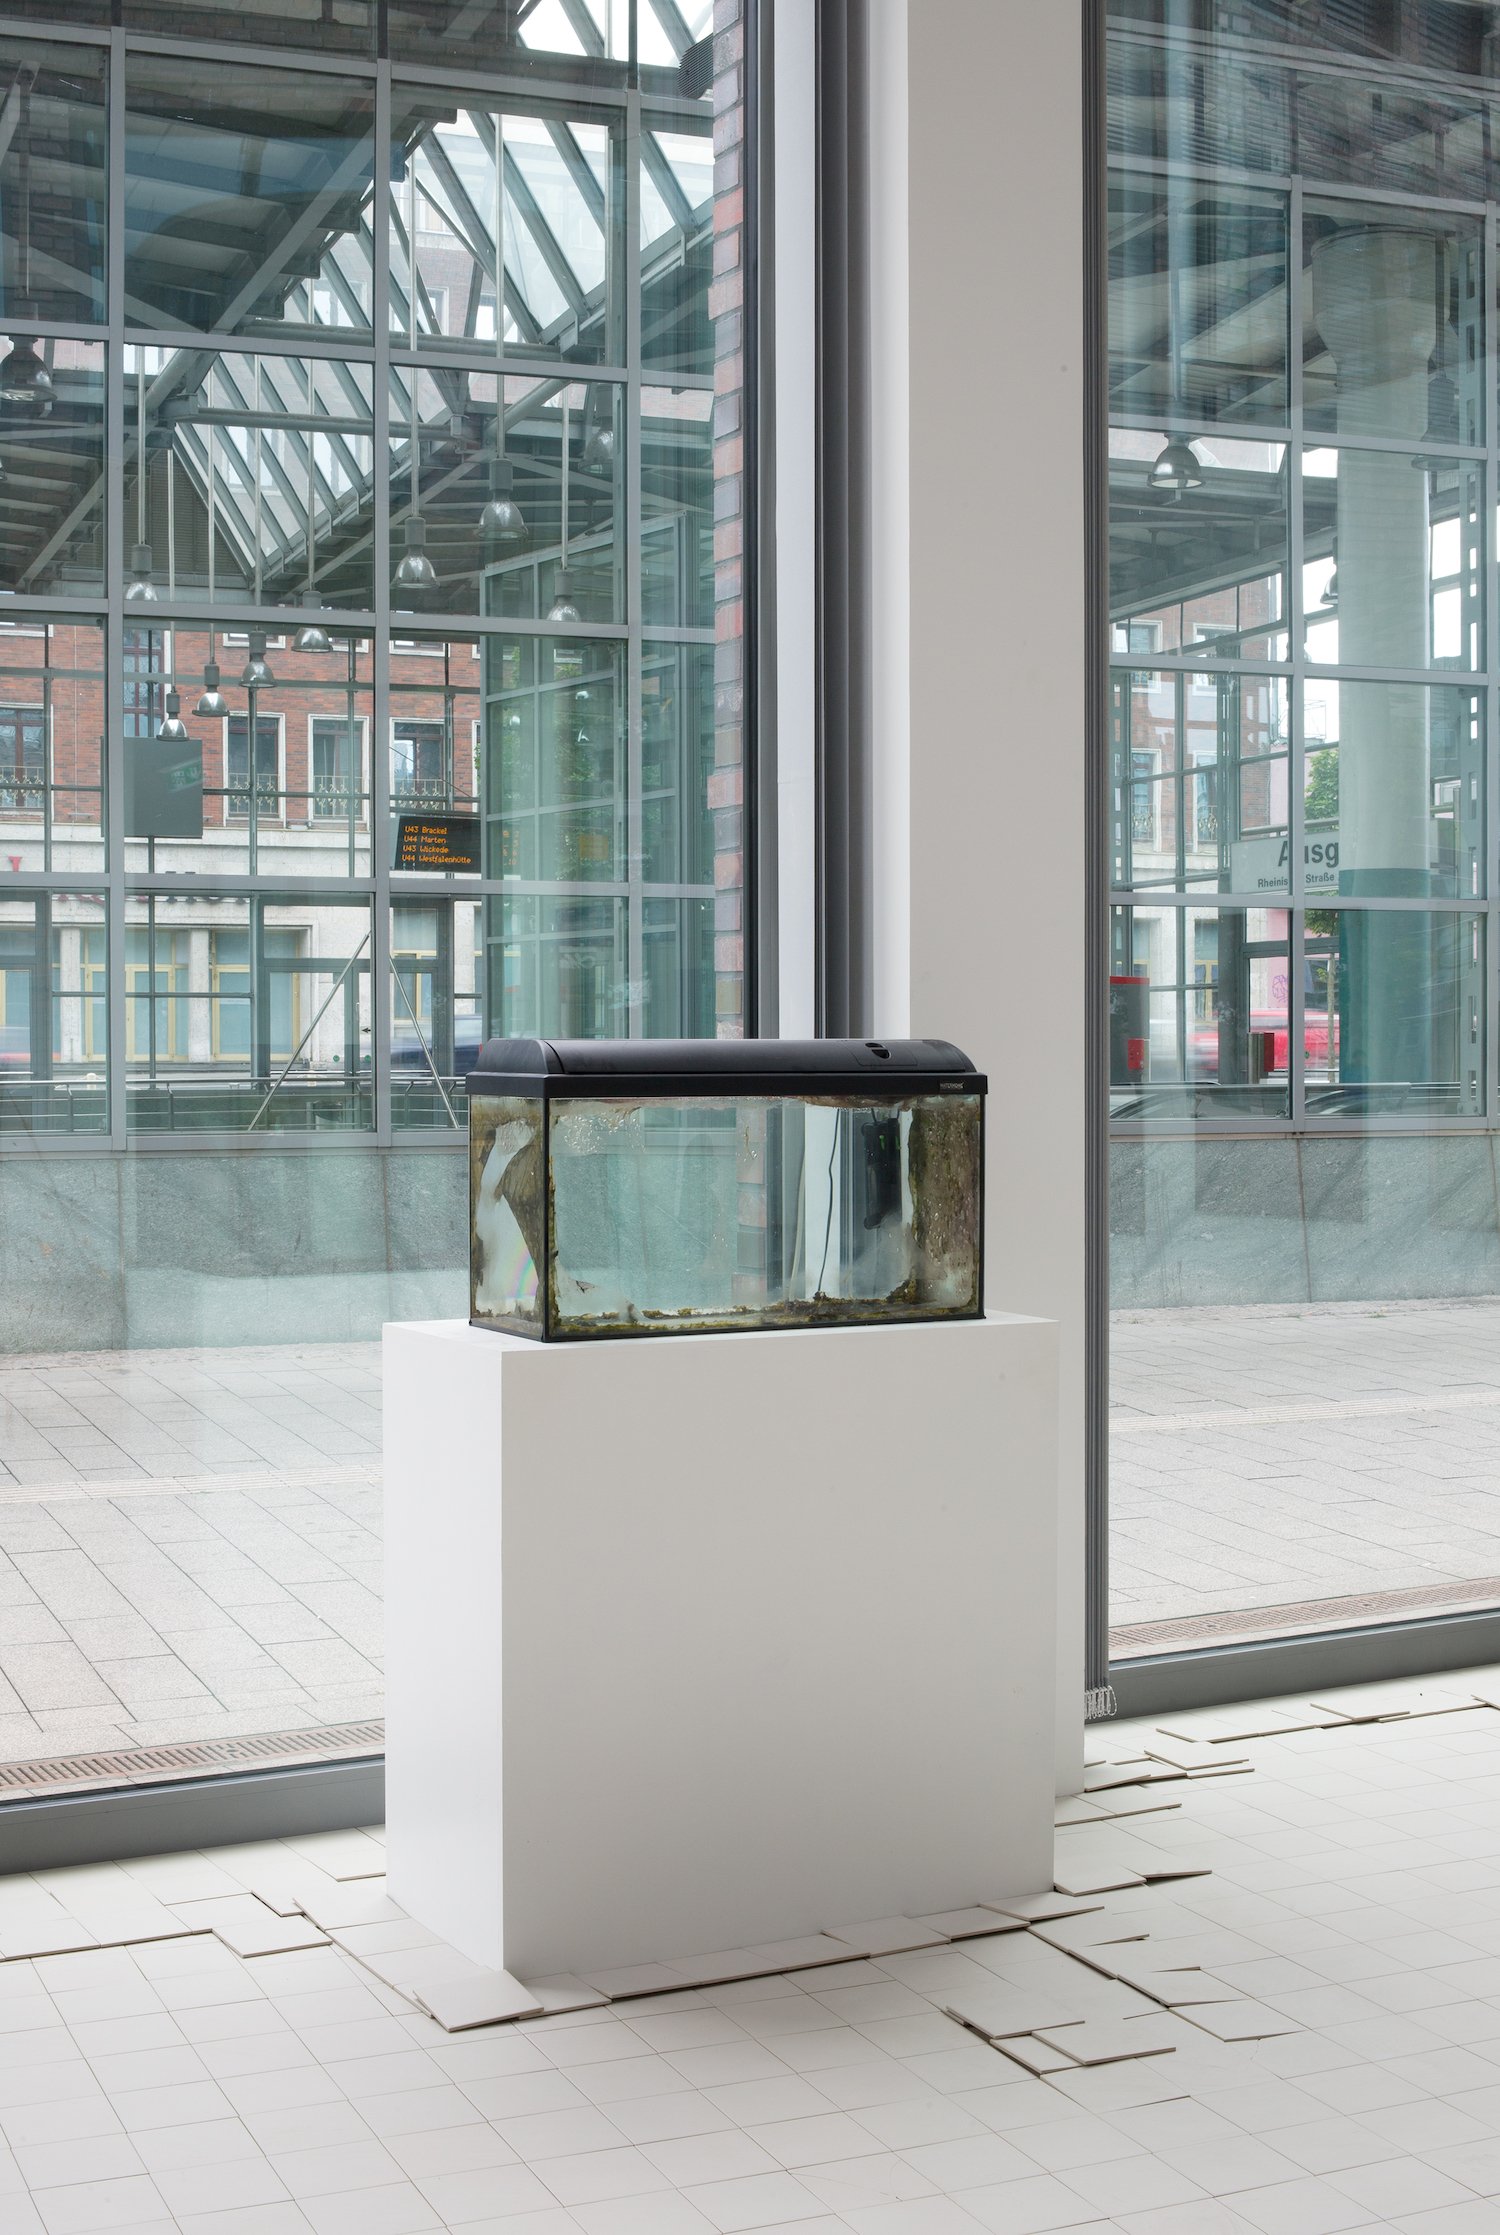  Waterhome  2009 to present  readymade aquarium, water filter, algae, plinth.  at the Dortmunder Kunstverein. August, 2022 